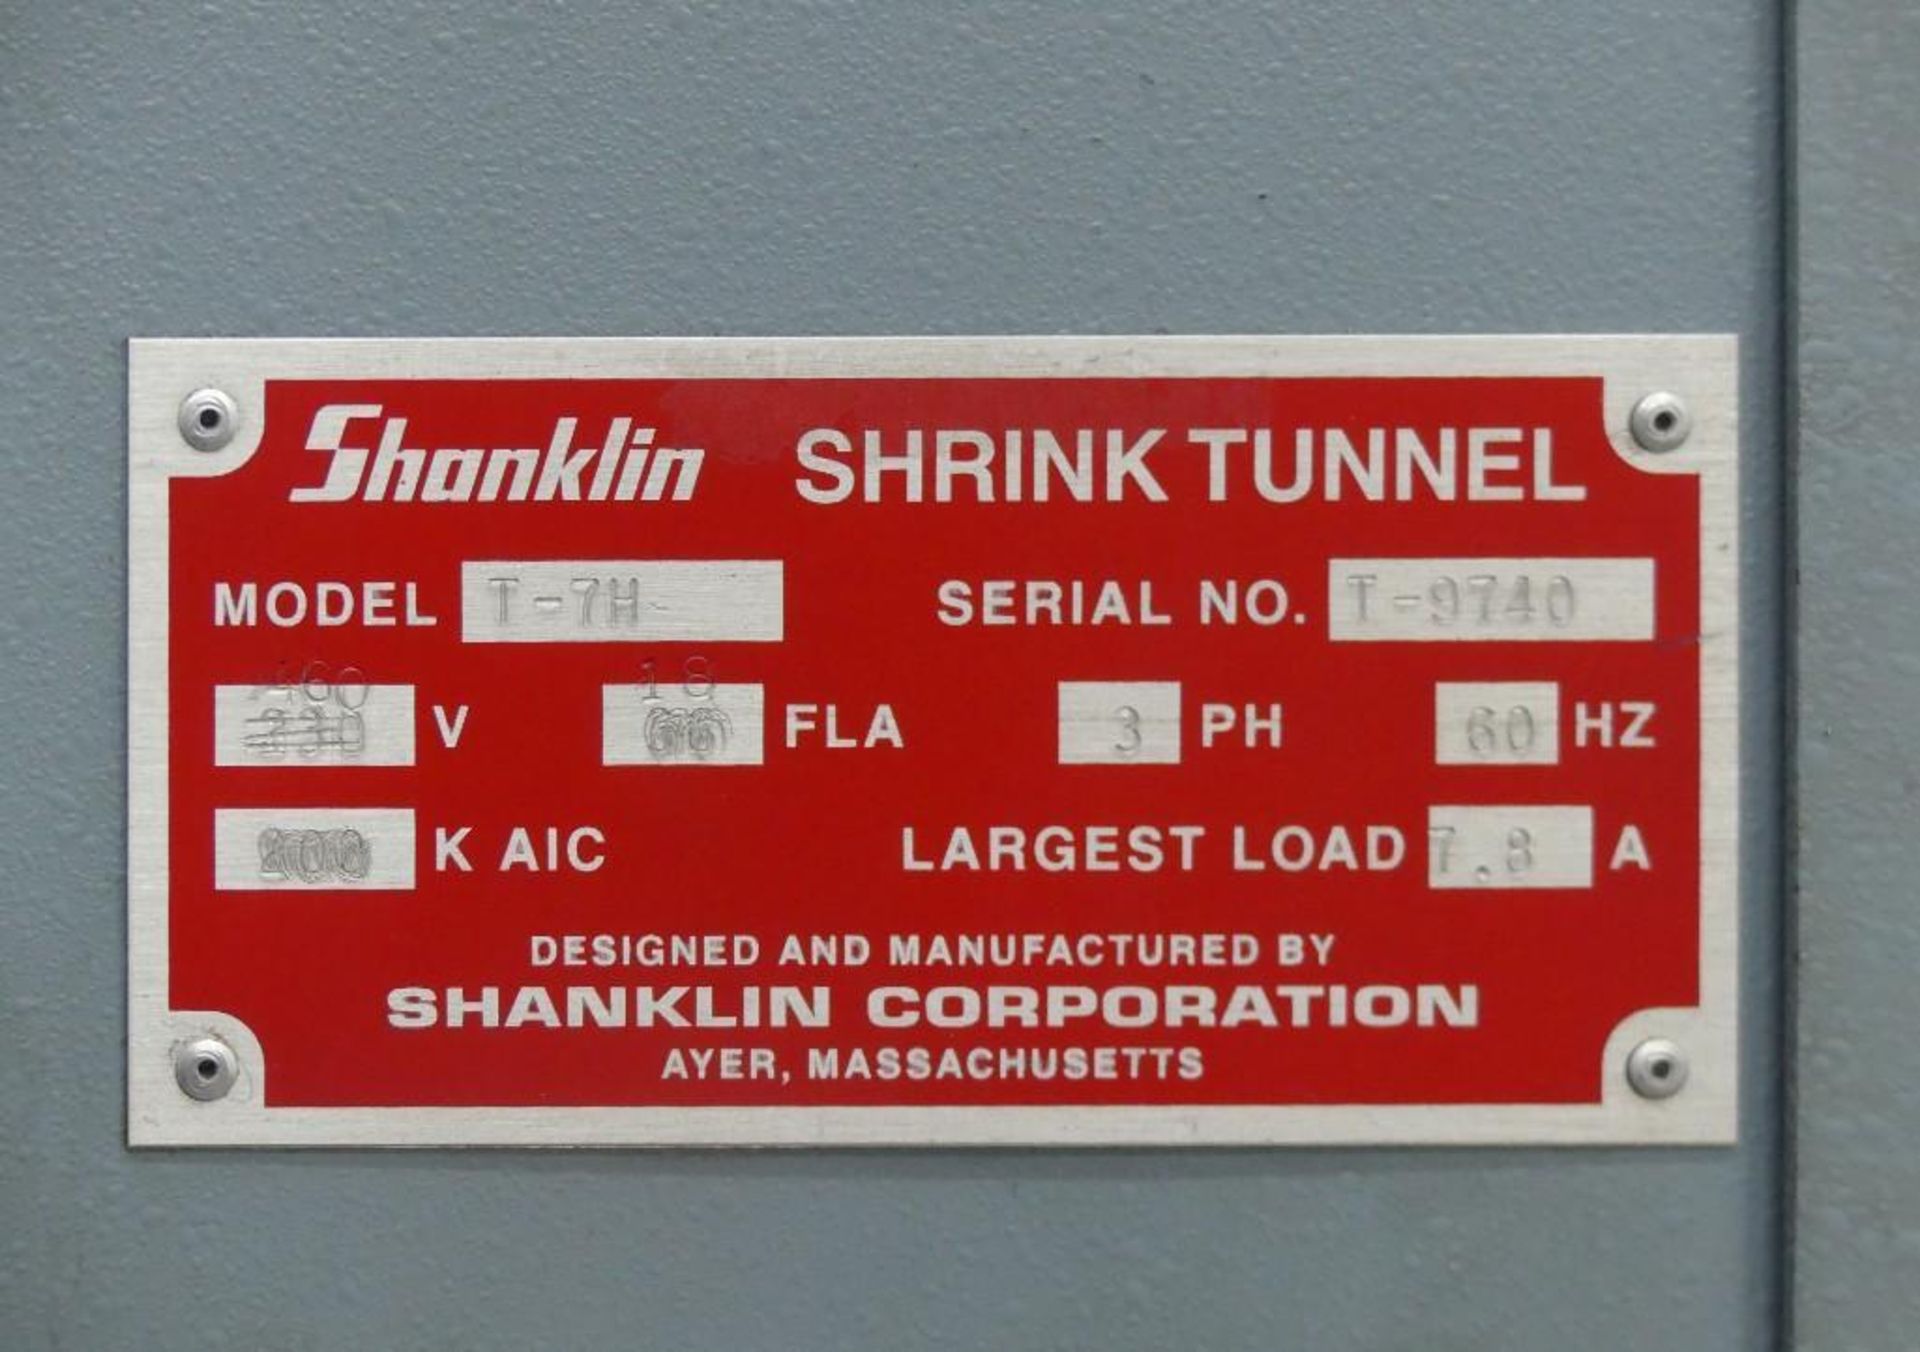 Shanklin T-7H Heat Shrink Tunnel - Image 13 of 13